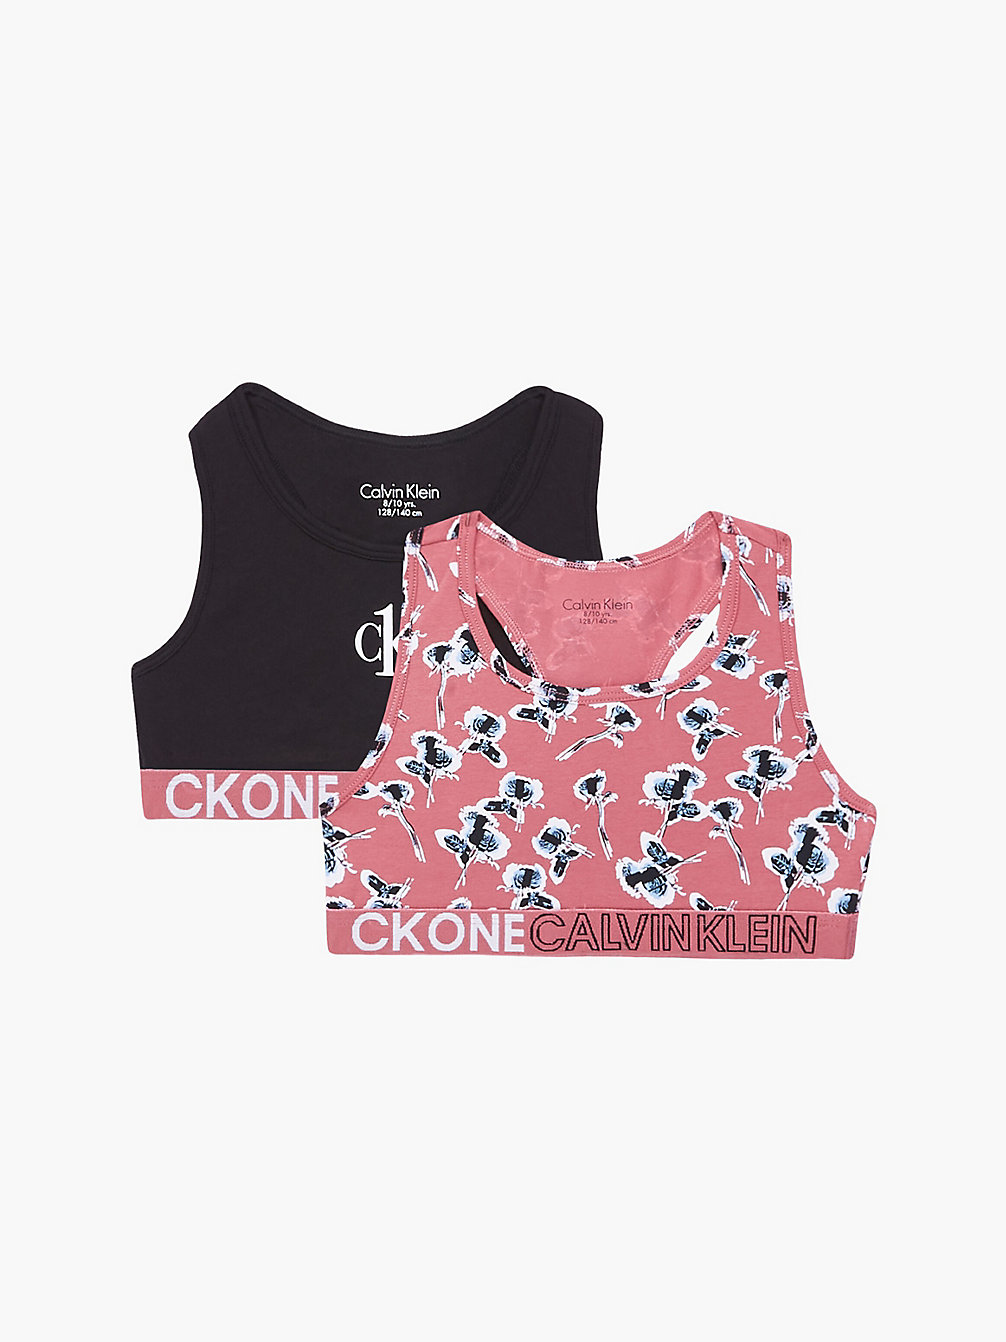 CKROSEPINKAOP/PVHBLACK 2 Pack Organic Cotton Girls Bralettes - CK One undefined girls Calvin Klein